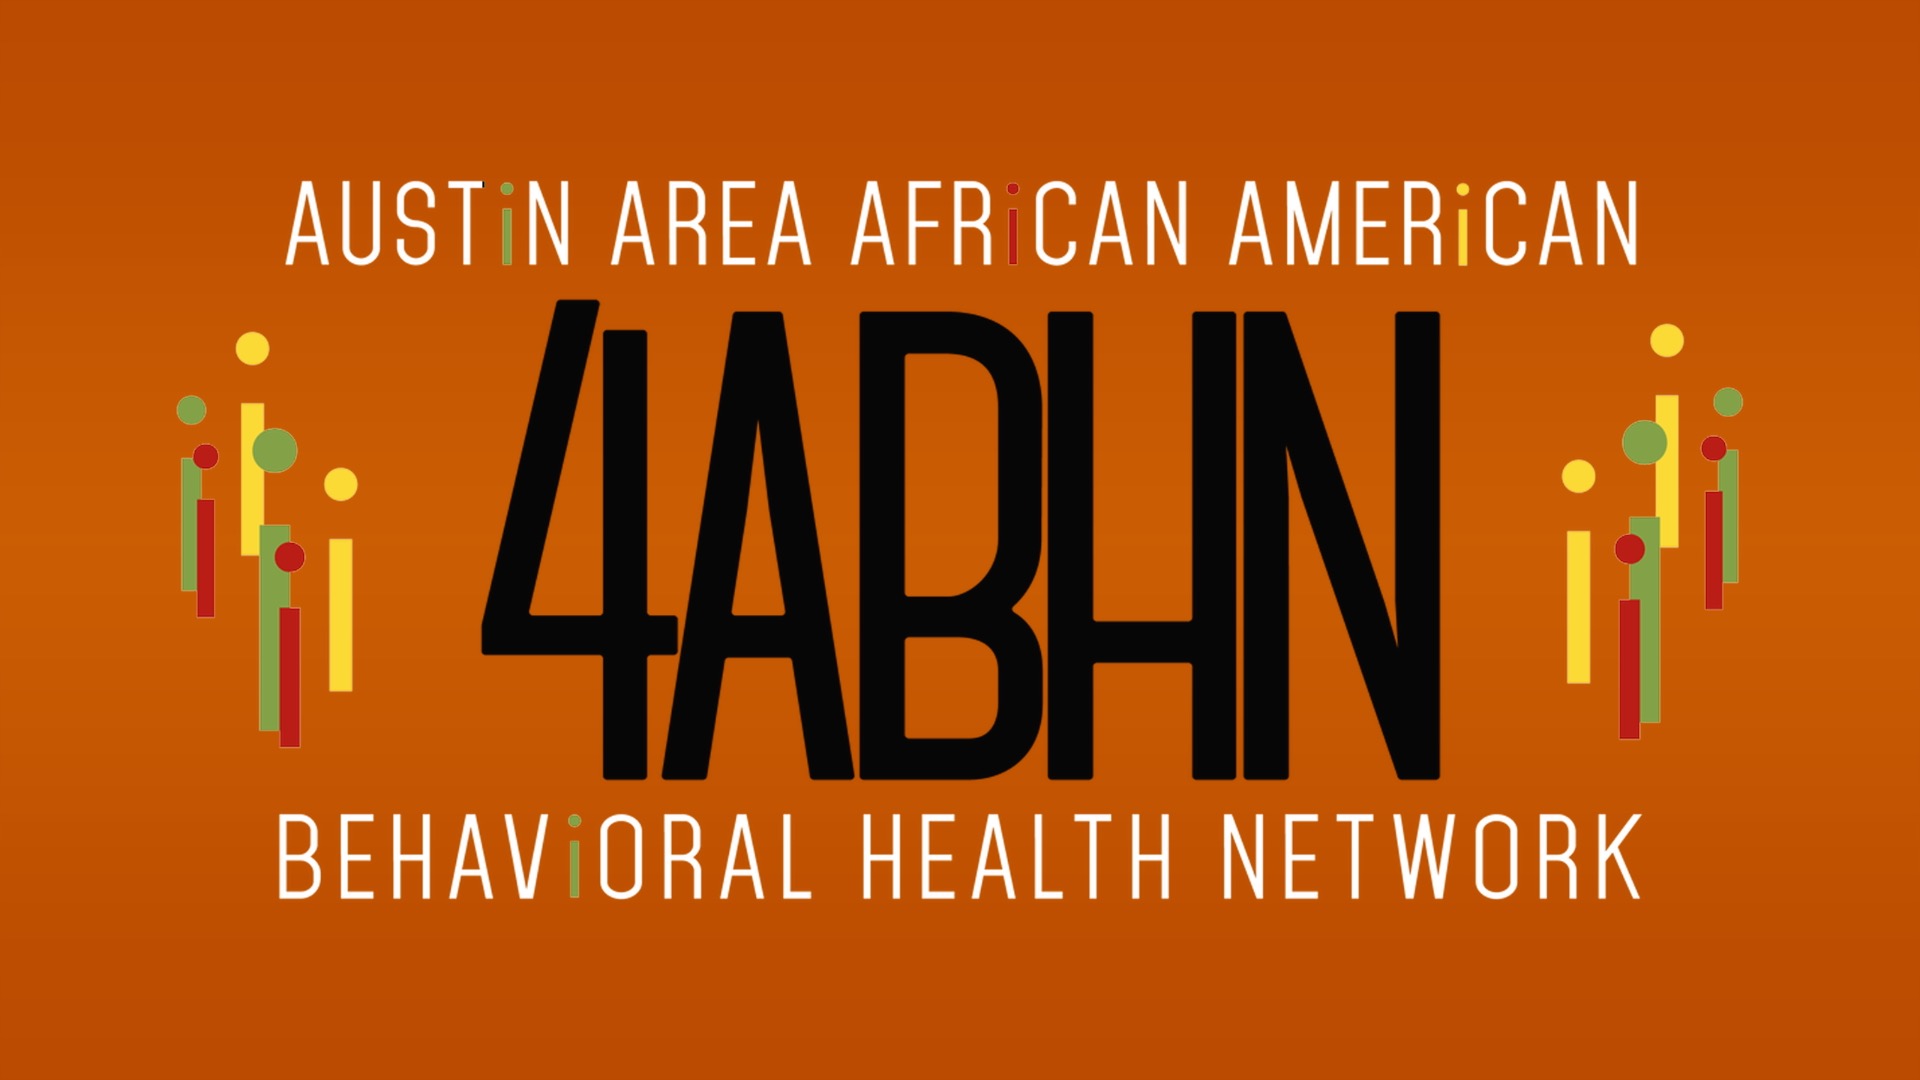 Austin Area African American Behavioral Health Network